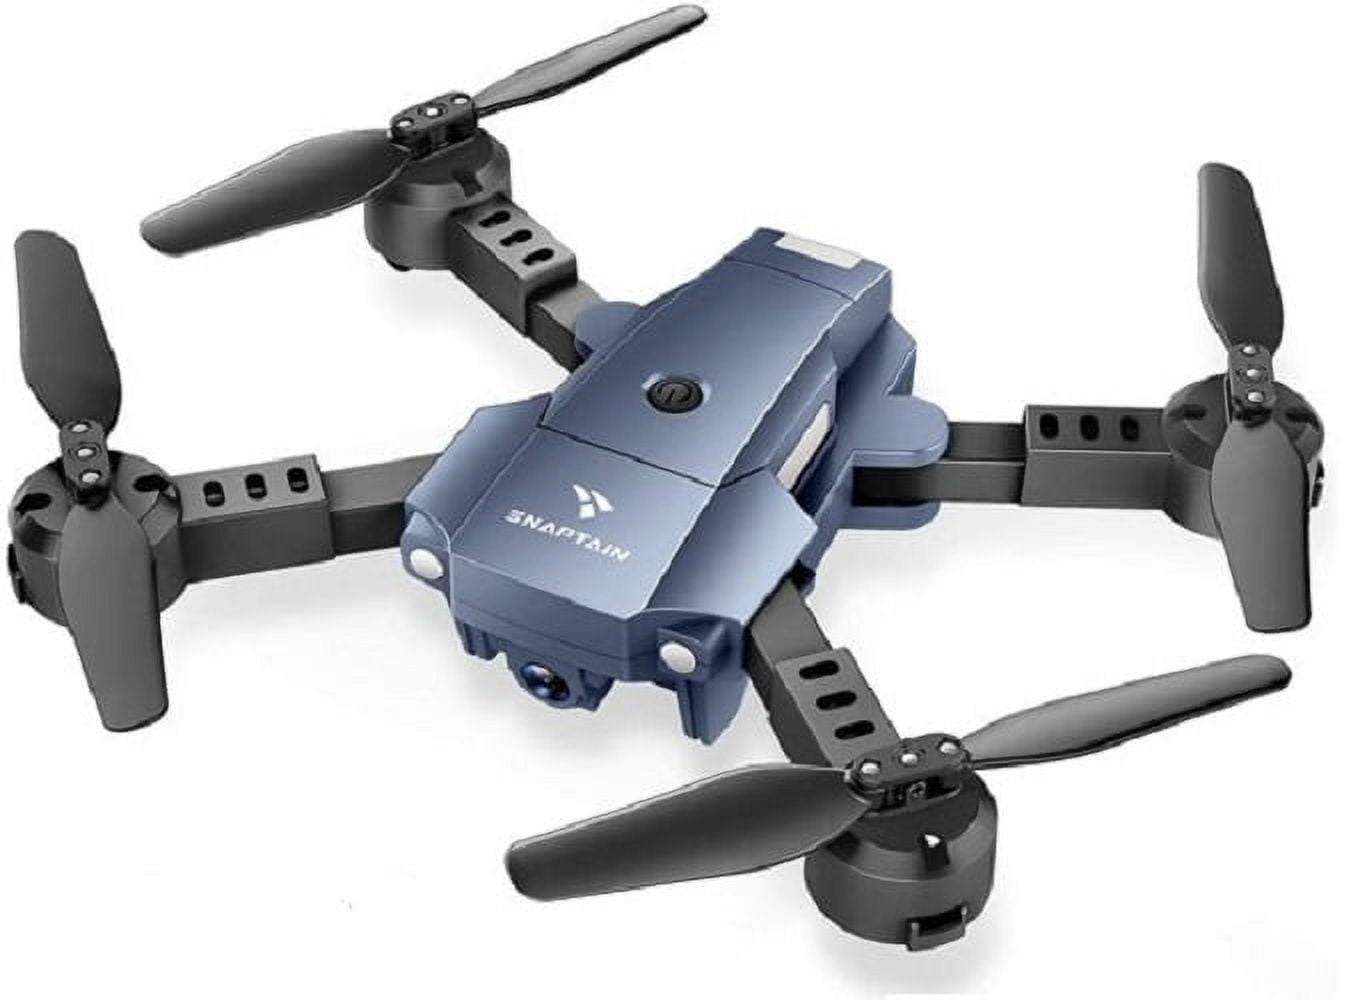 Mini Drone Snaptain Sp360 4-axis Camera